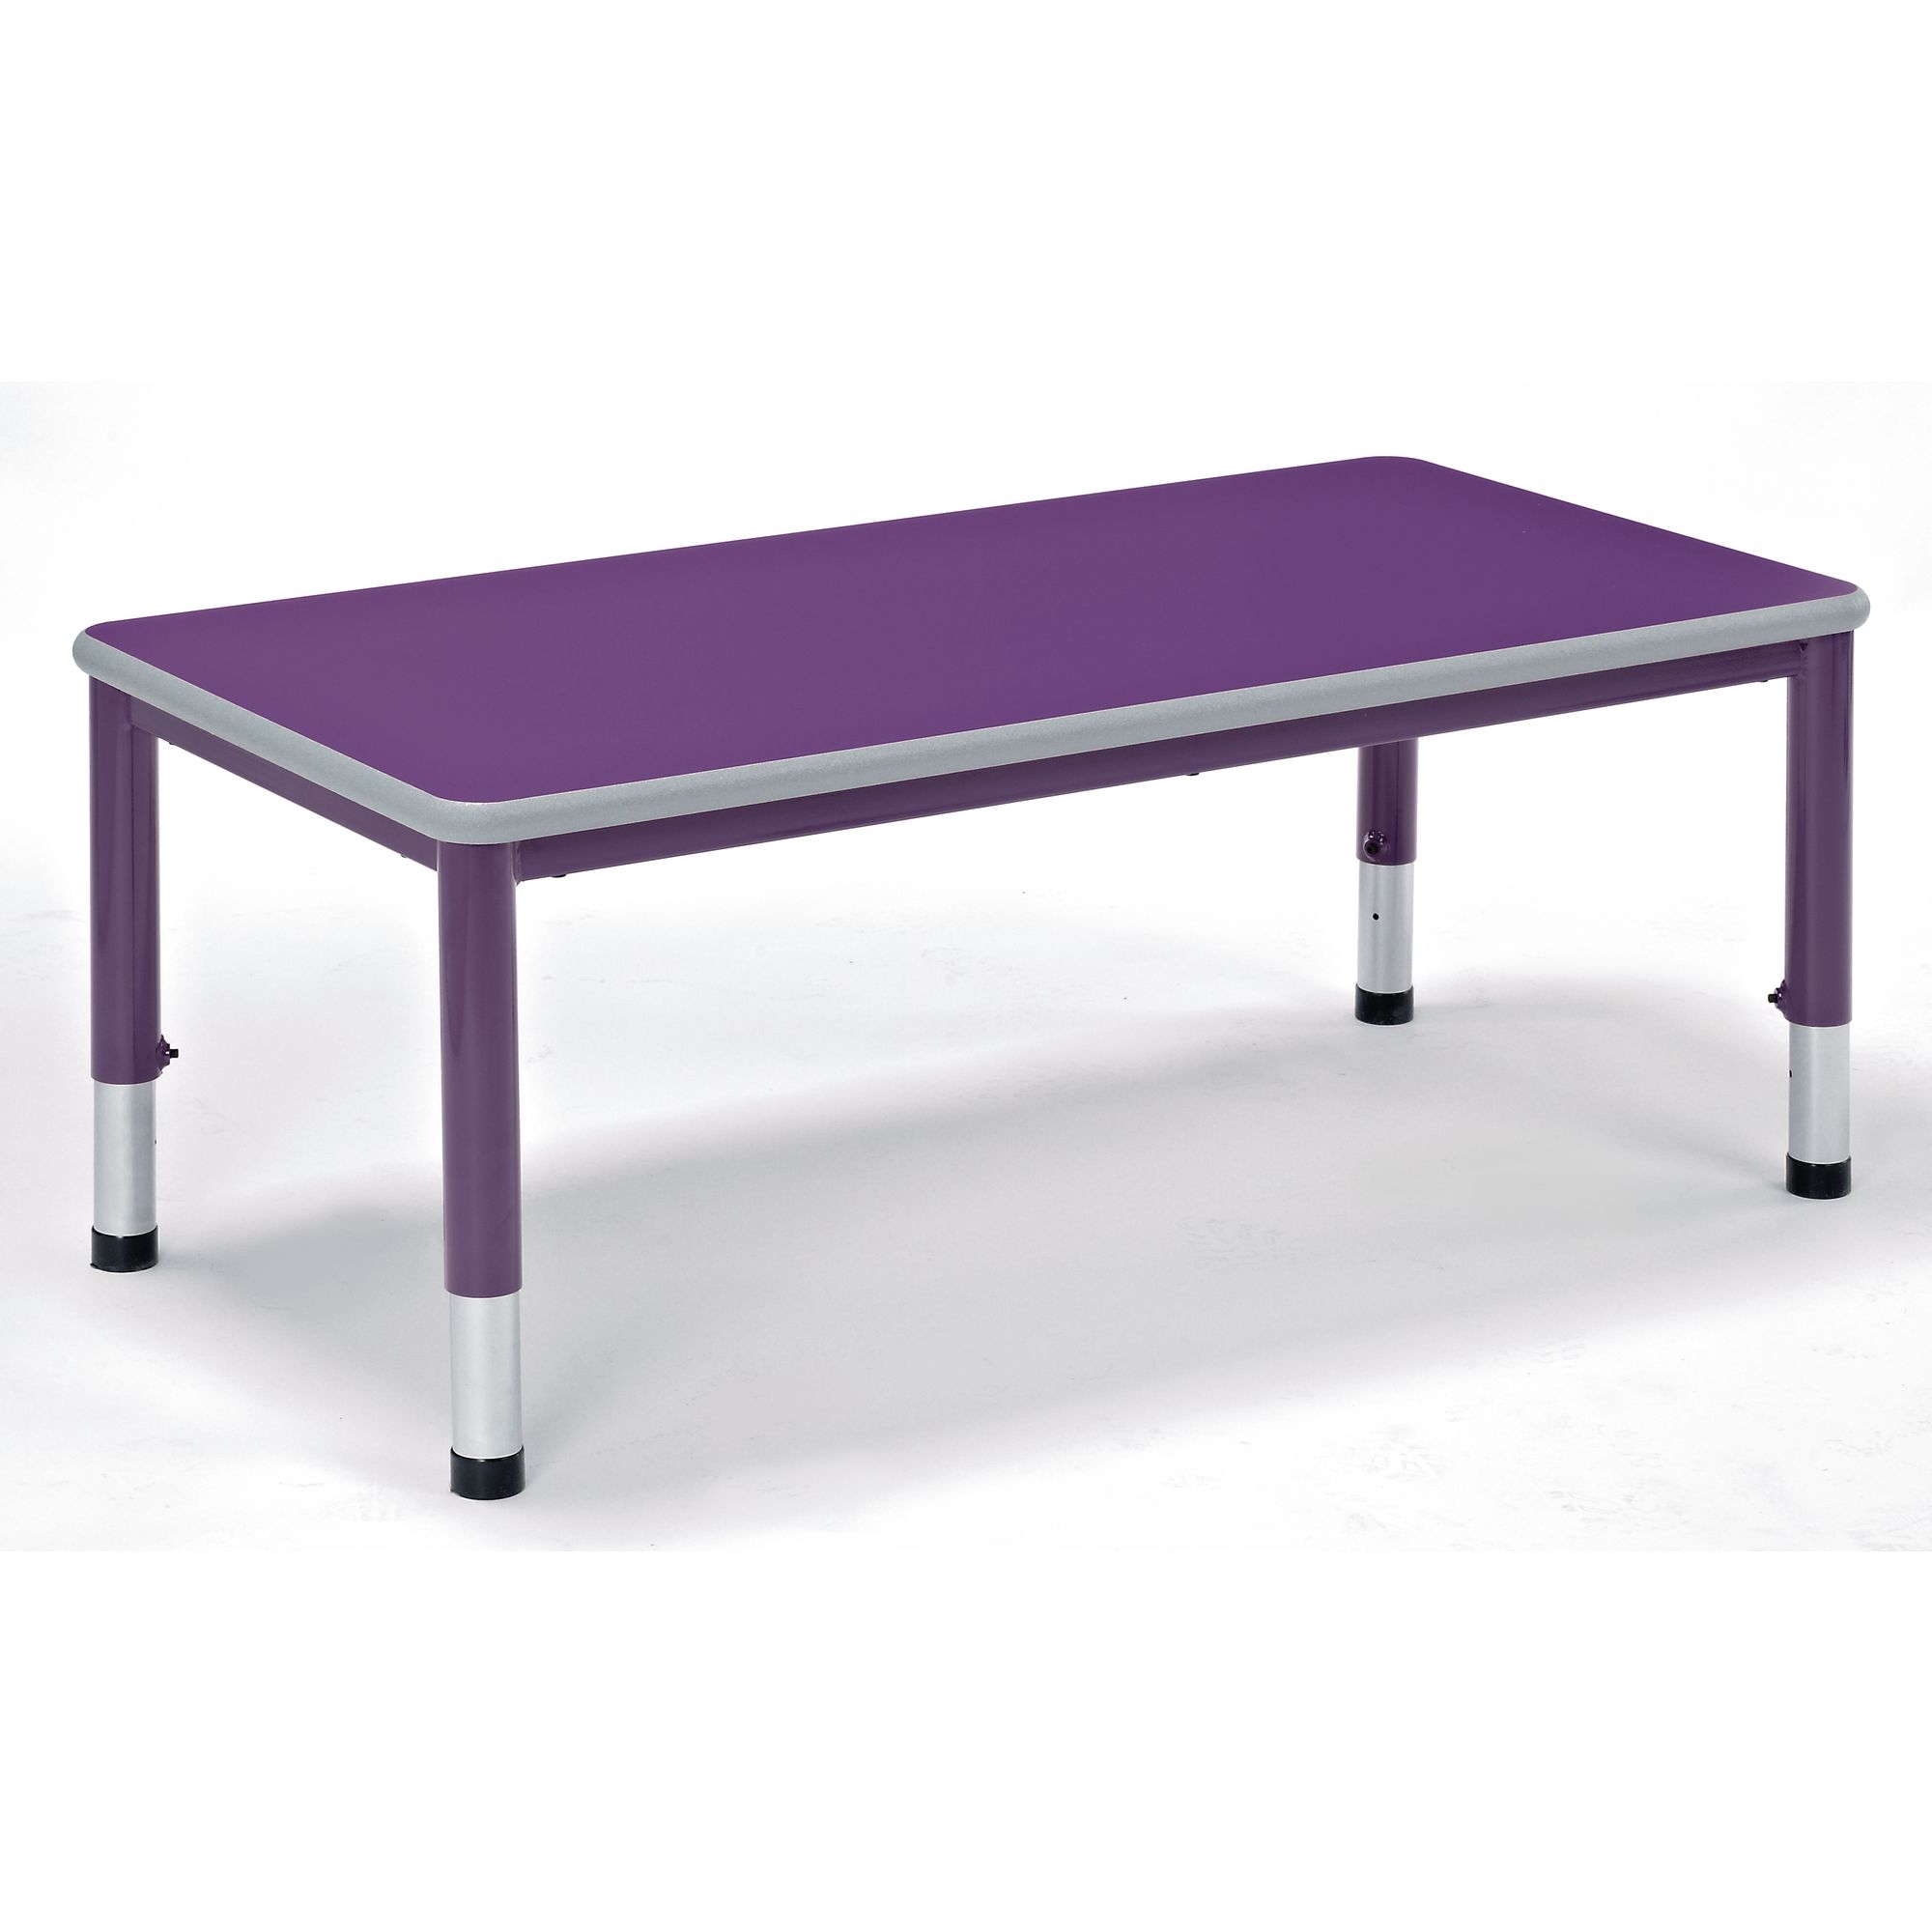 Harlequin Rectangular Height Adjustable Steel Classroom Table - 1200 x 600 x 600mm - Red